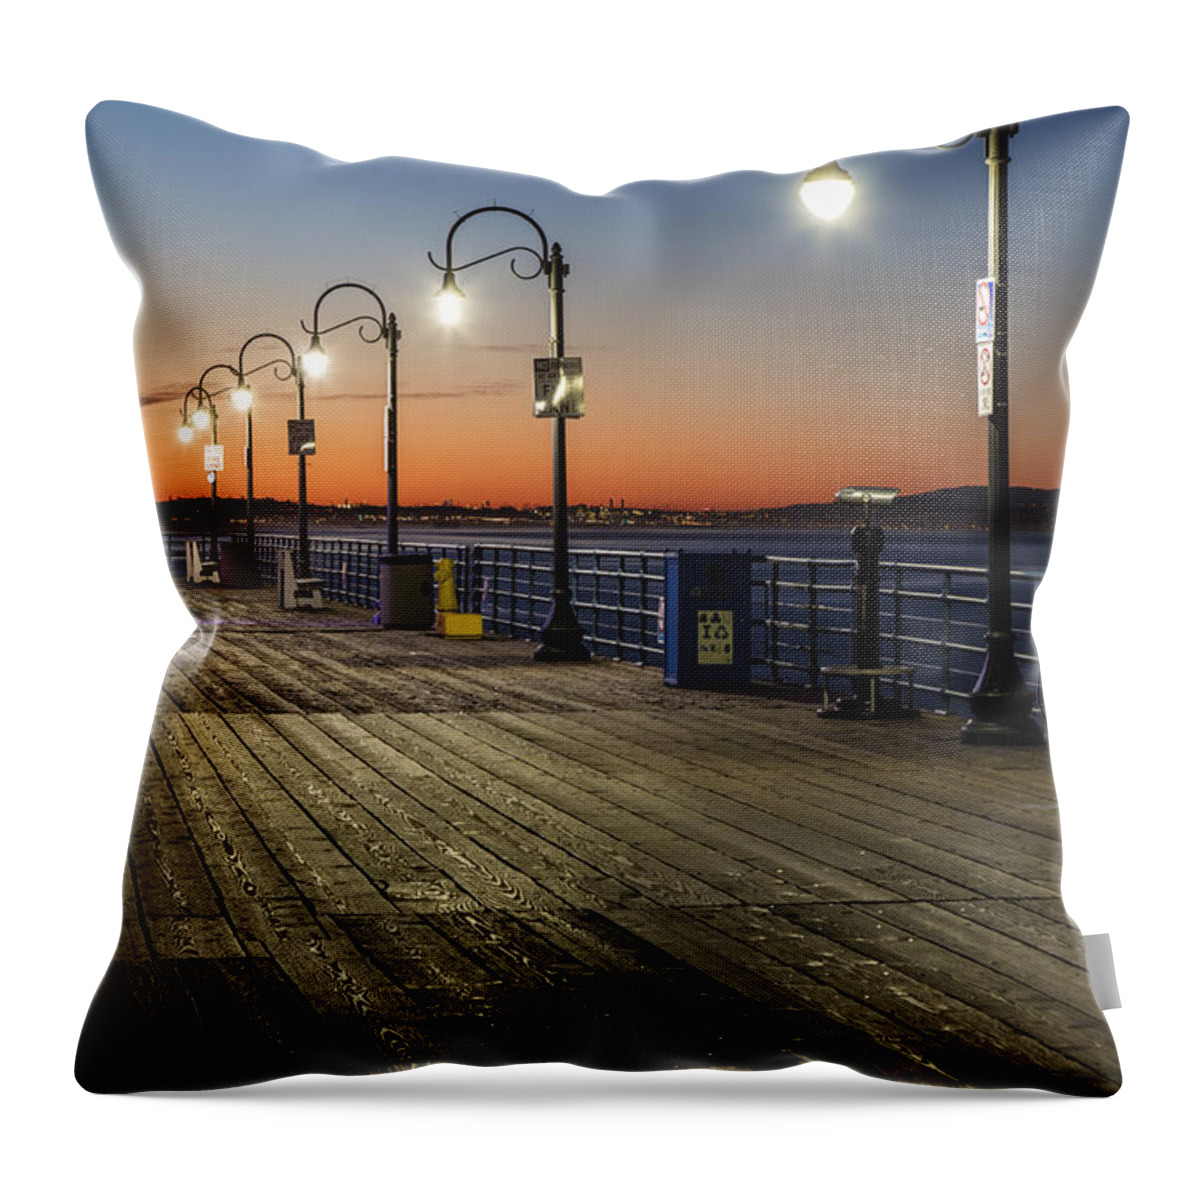 Santa Monica Pier Throw Pillow featuring the photograph Santa Monica Pier Lights by John McGraw